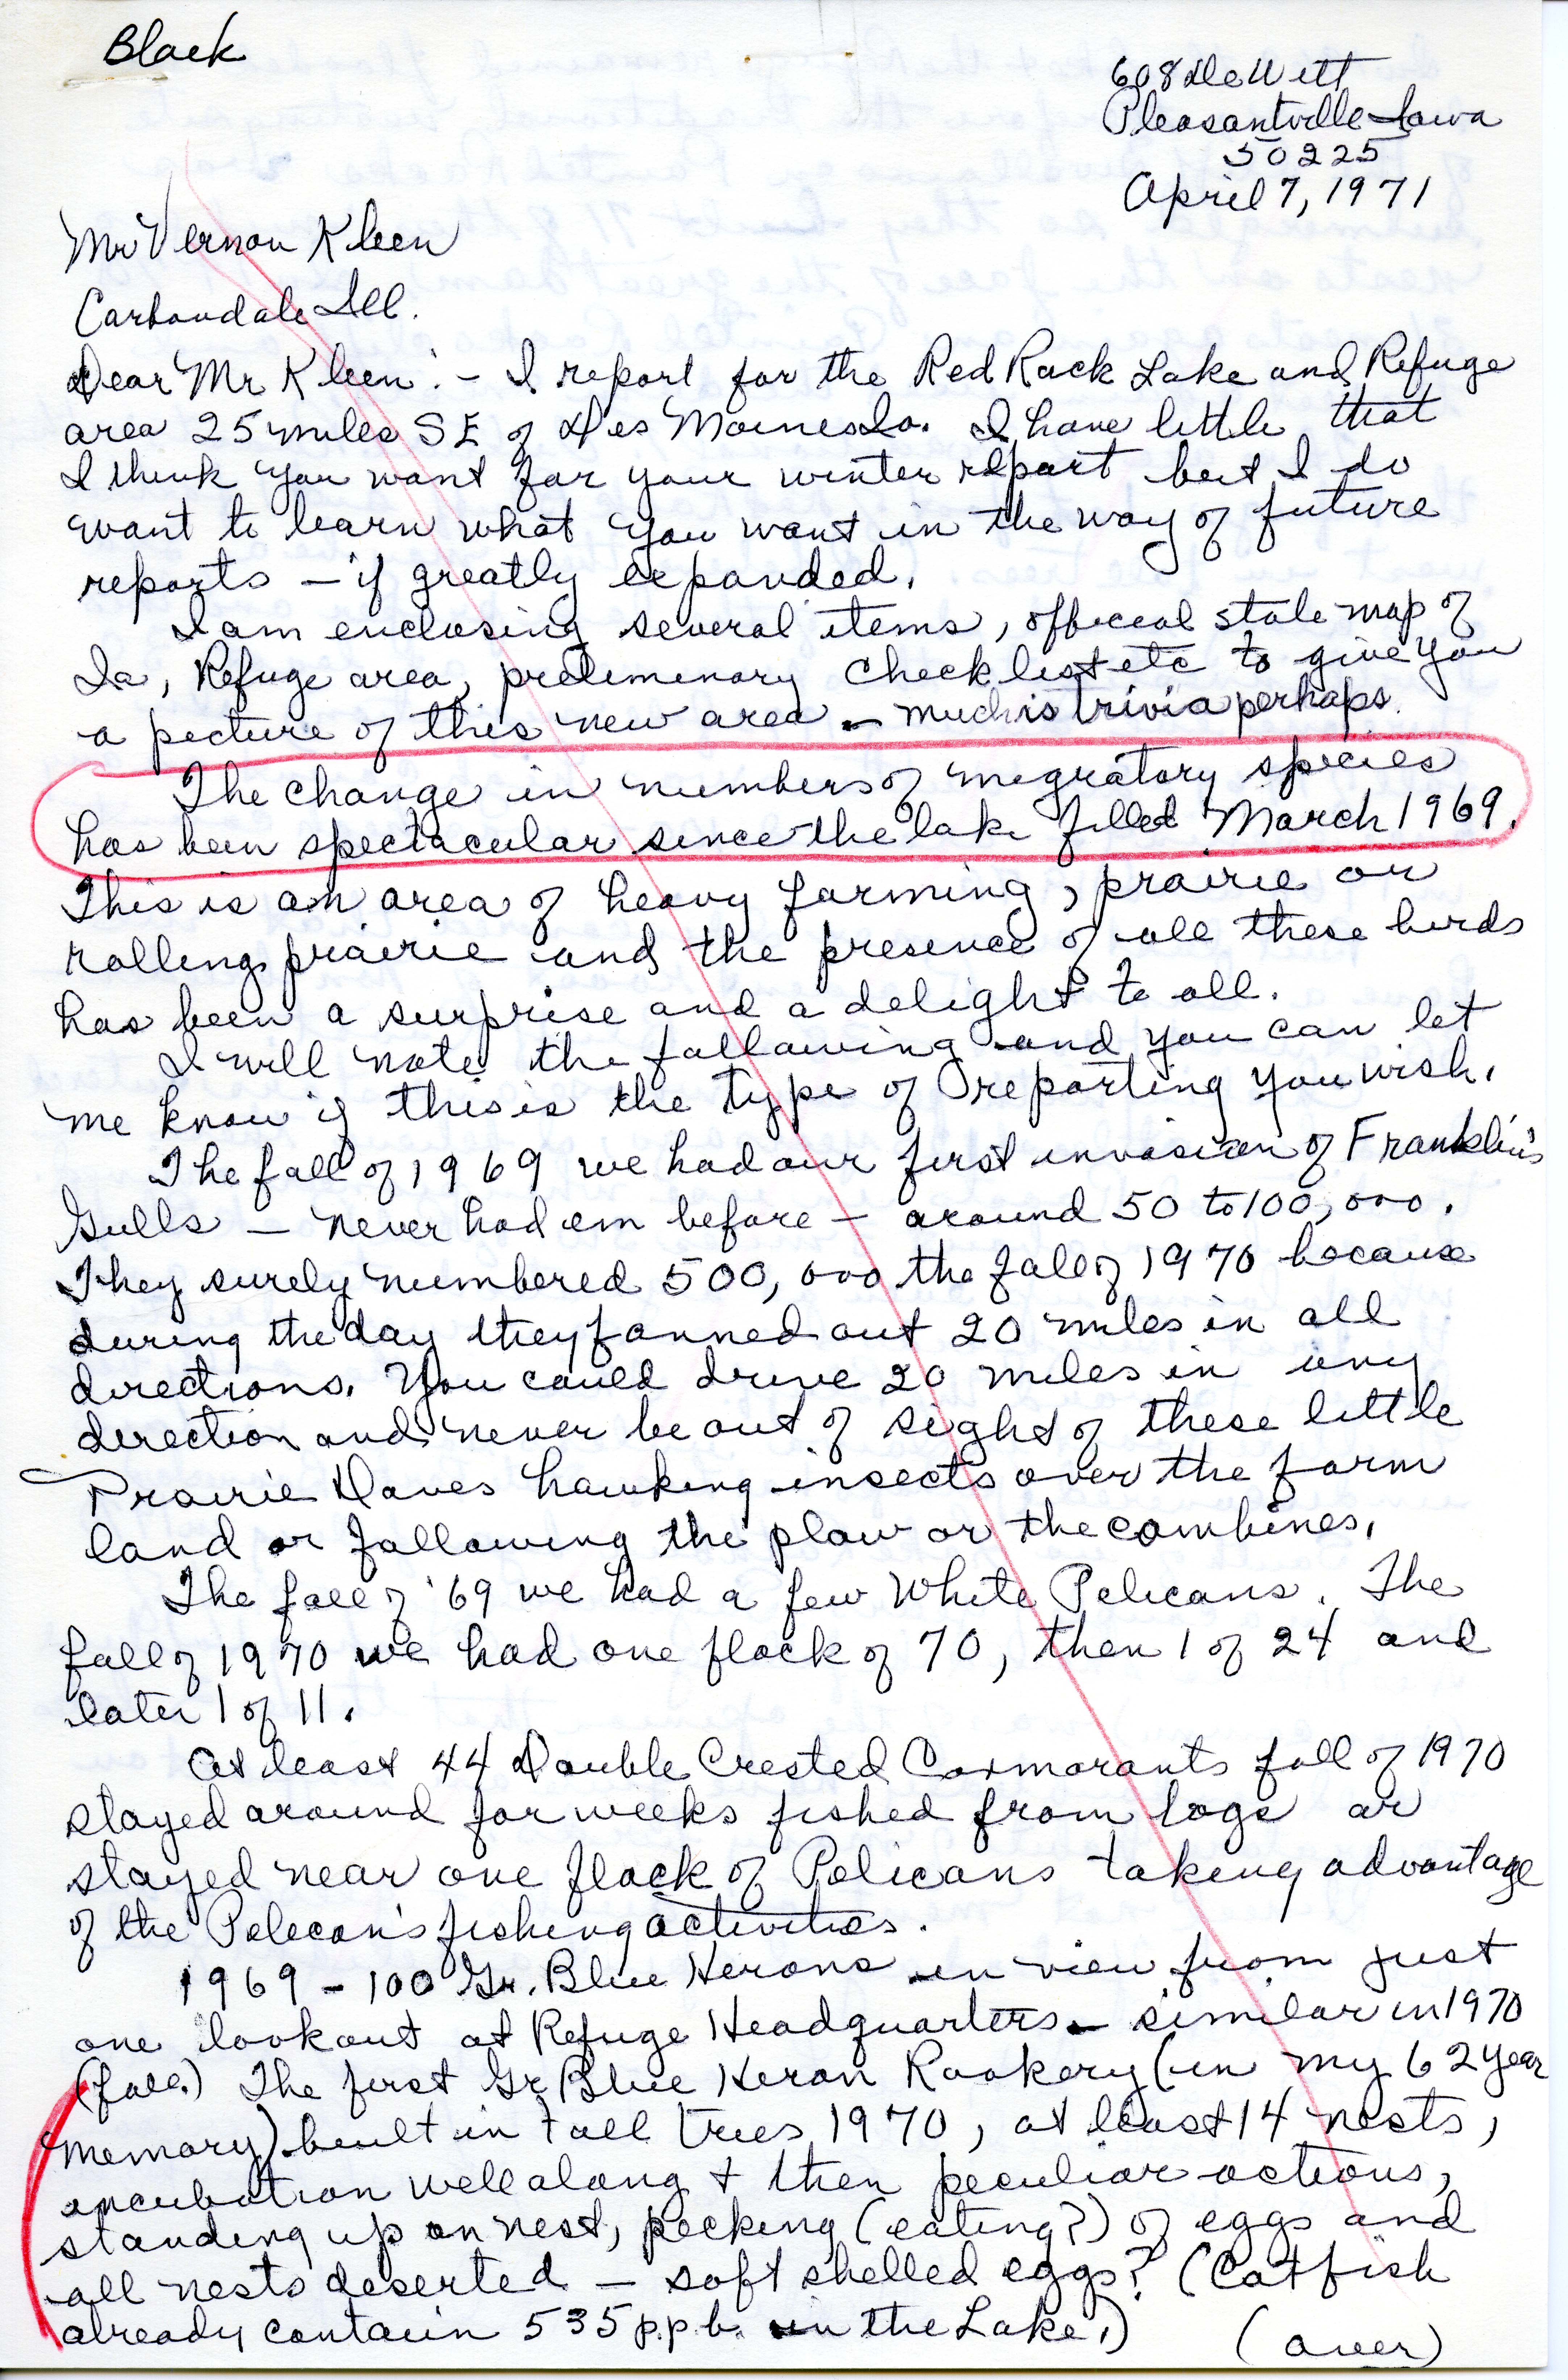 Gladys Black letter to Vernon M. Kleen regarding changes in habitat and birds sighted at Red Rock Refuge during 1968-1970, April 7, 1971